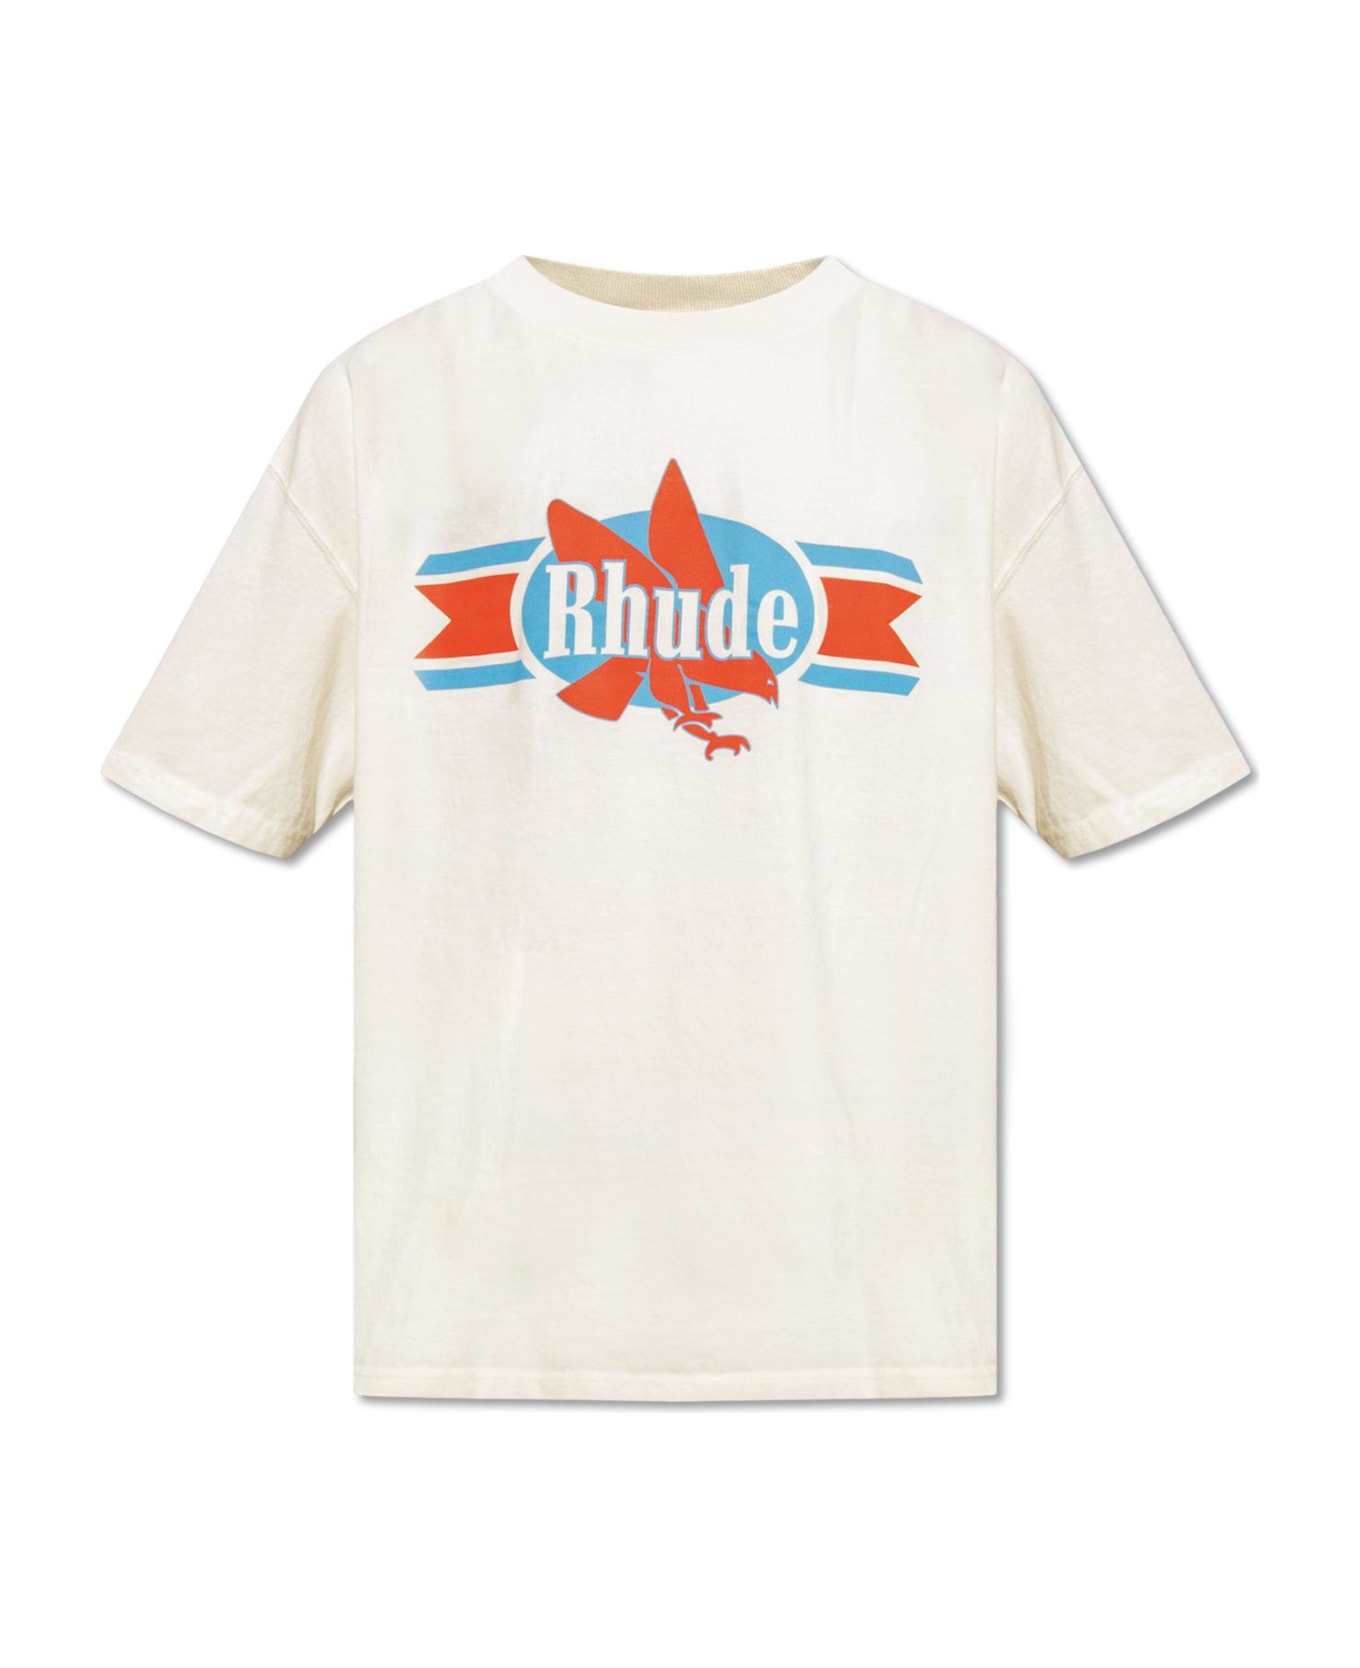 Rhude Cotton T-shirt - White